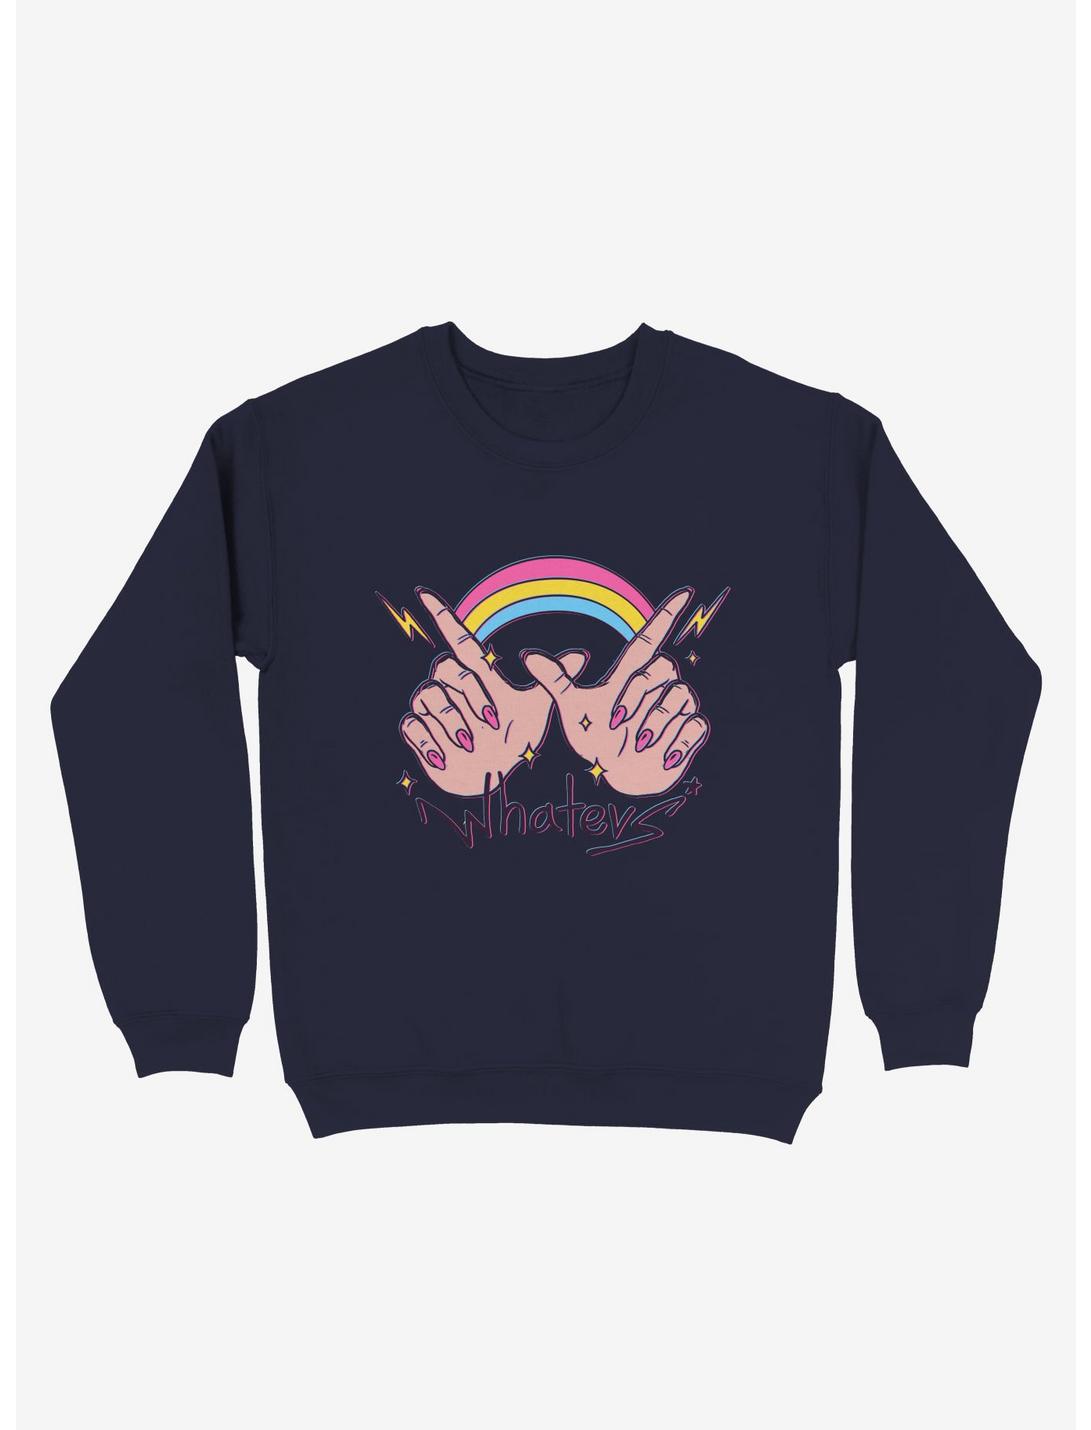 Whatevs! Rainbow Sweatshirt, NAVY, hi-res